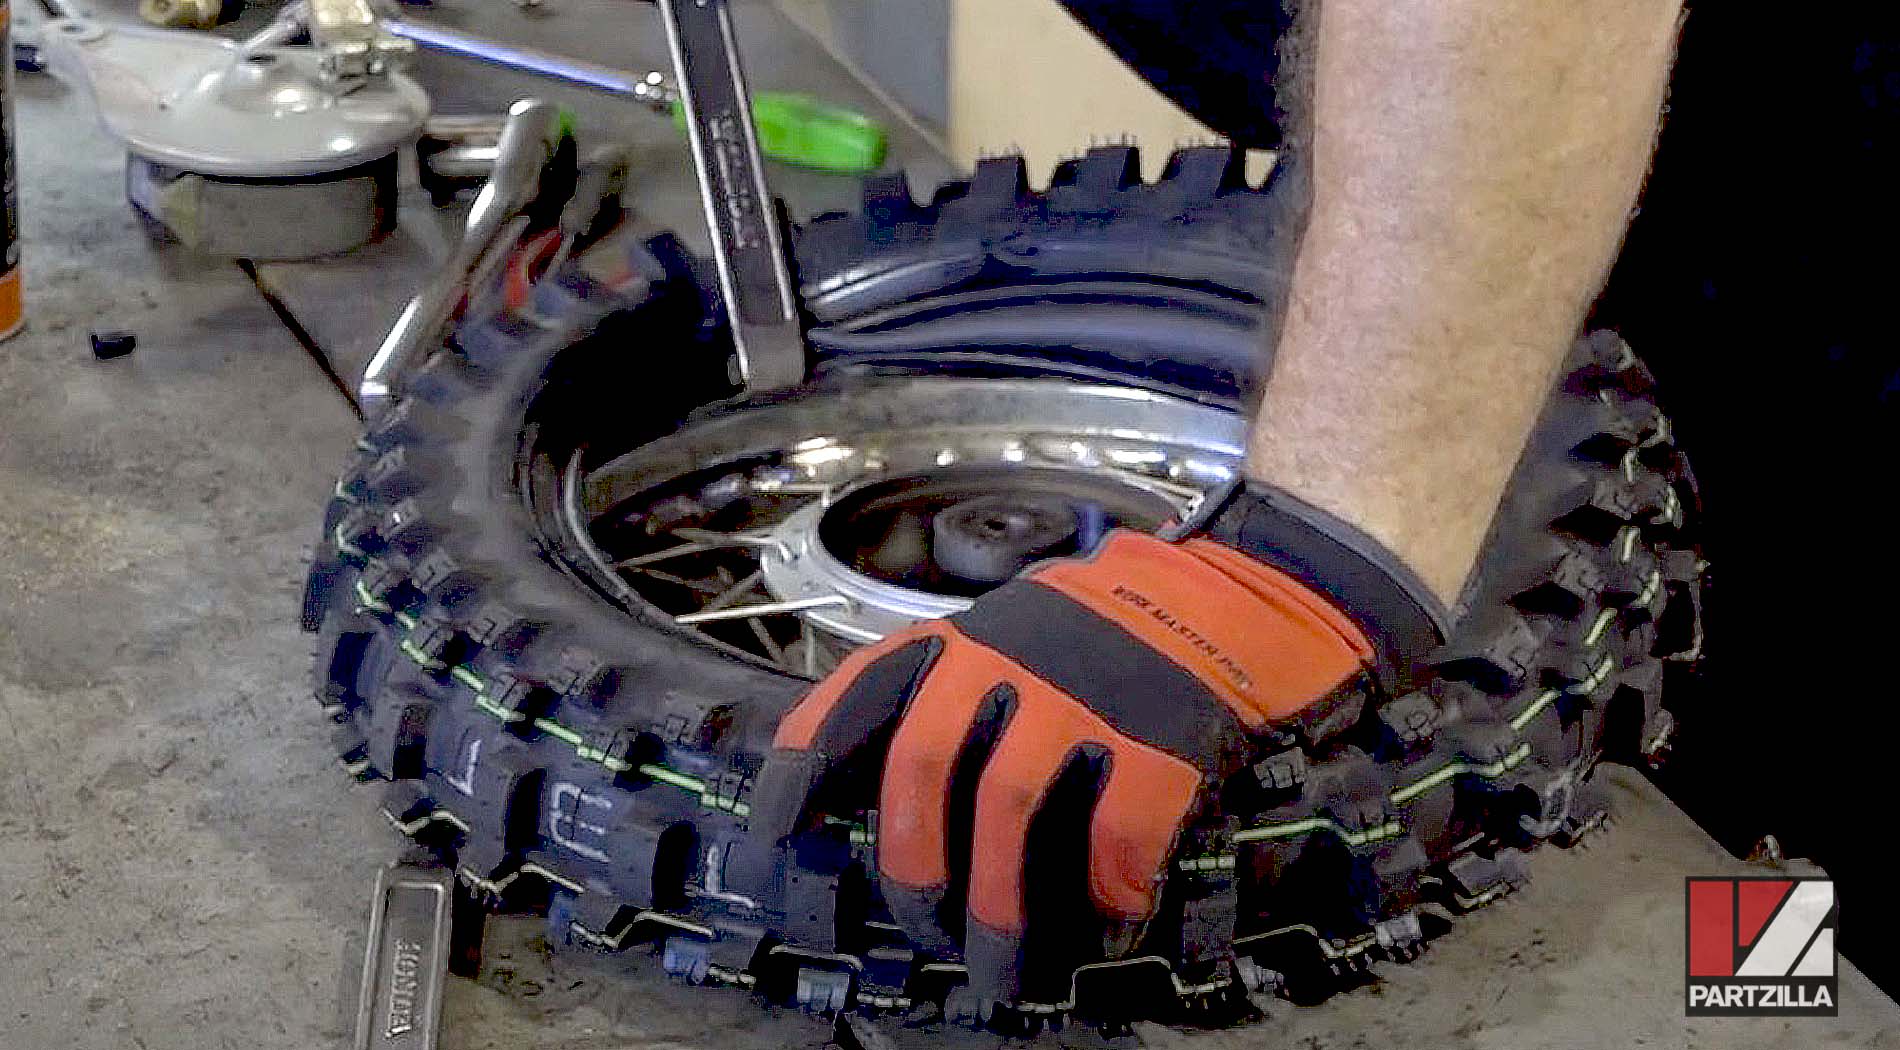 Kawasaki dirt bike new tire installation